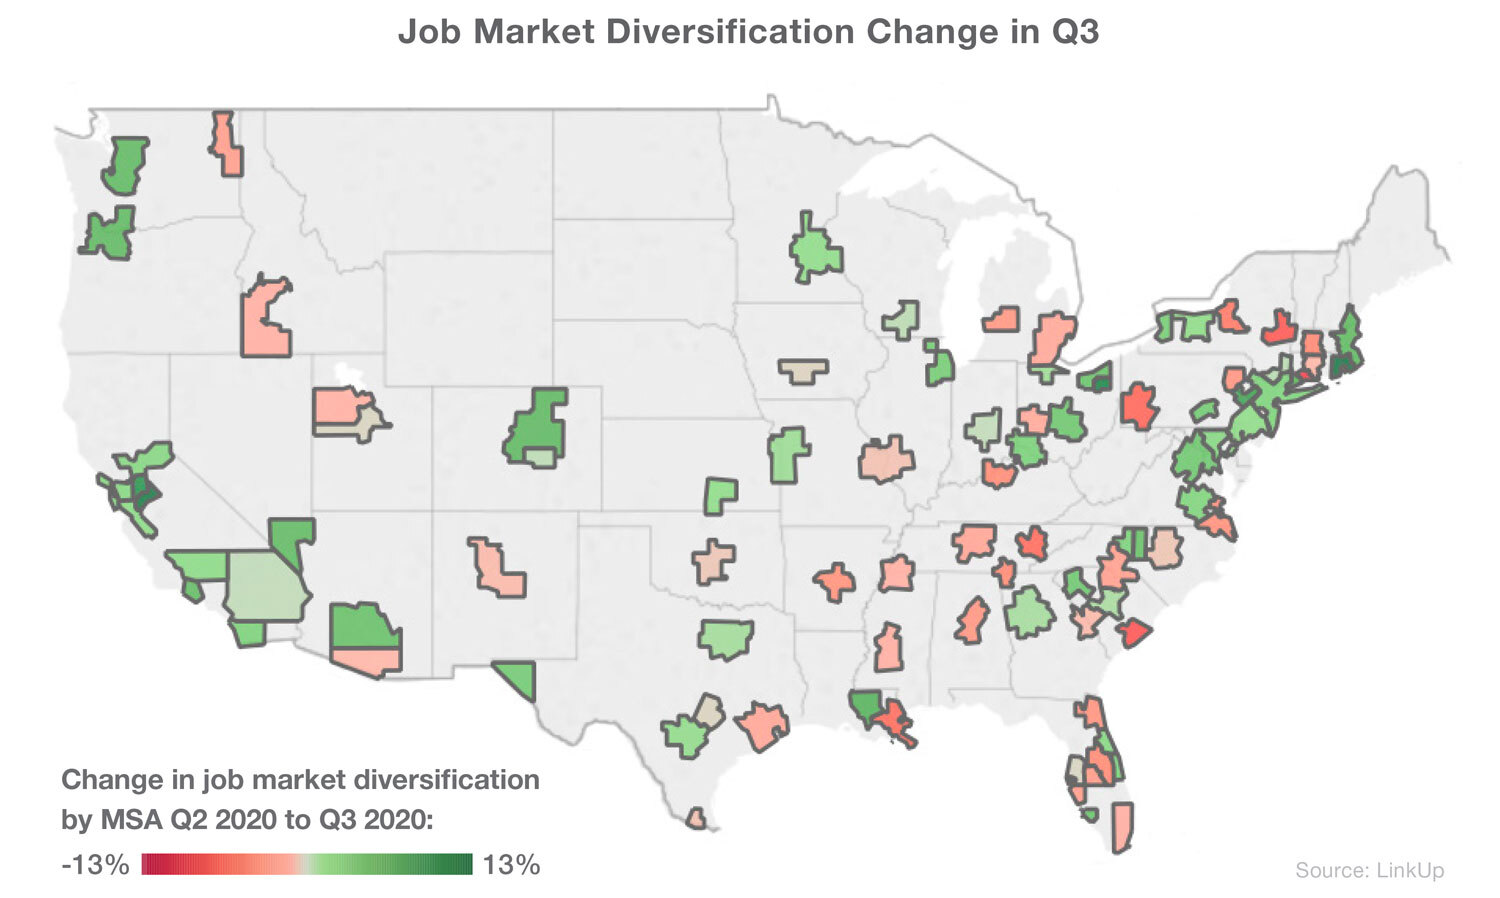 Job market diversification change in Q3 2020